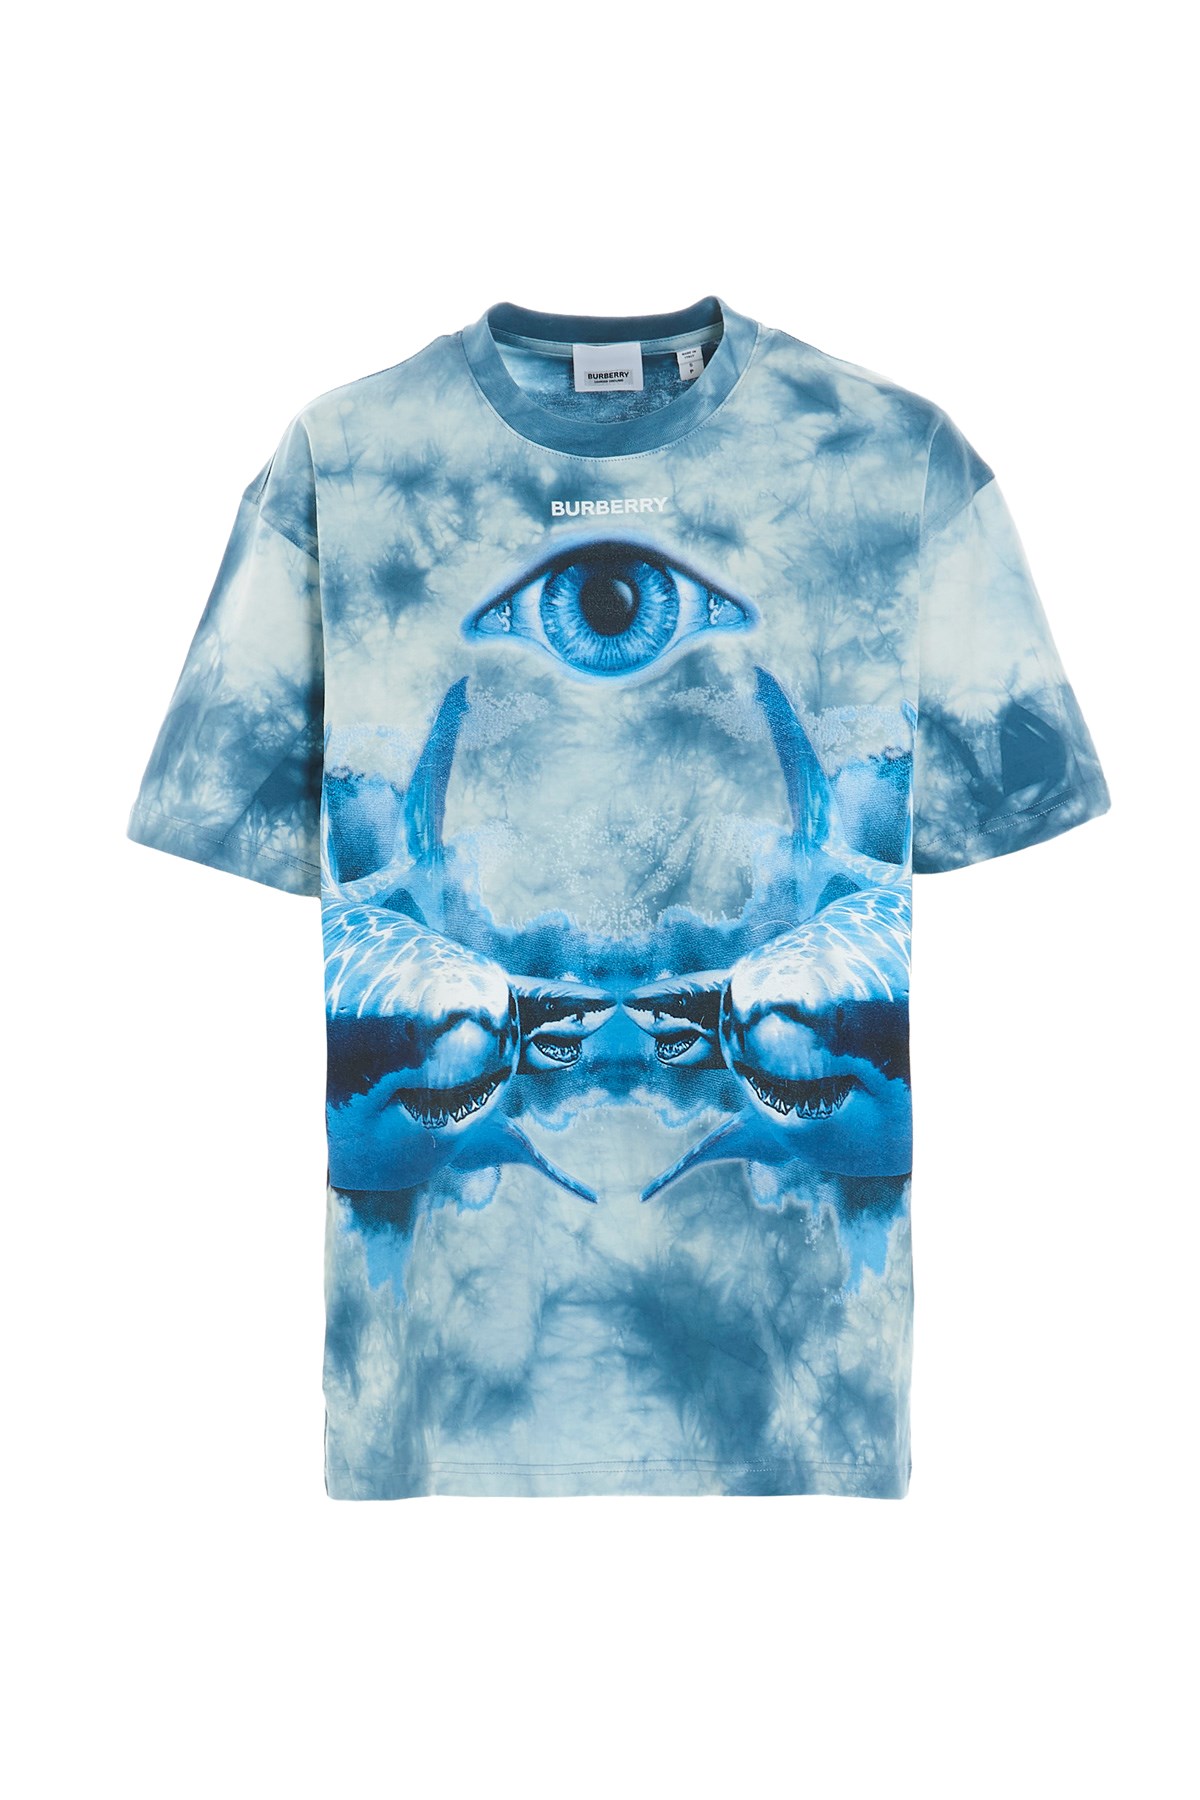 BURBERRY 'Carrick Eye' T-Shirt